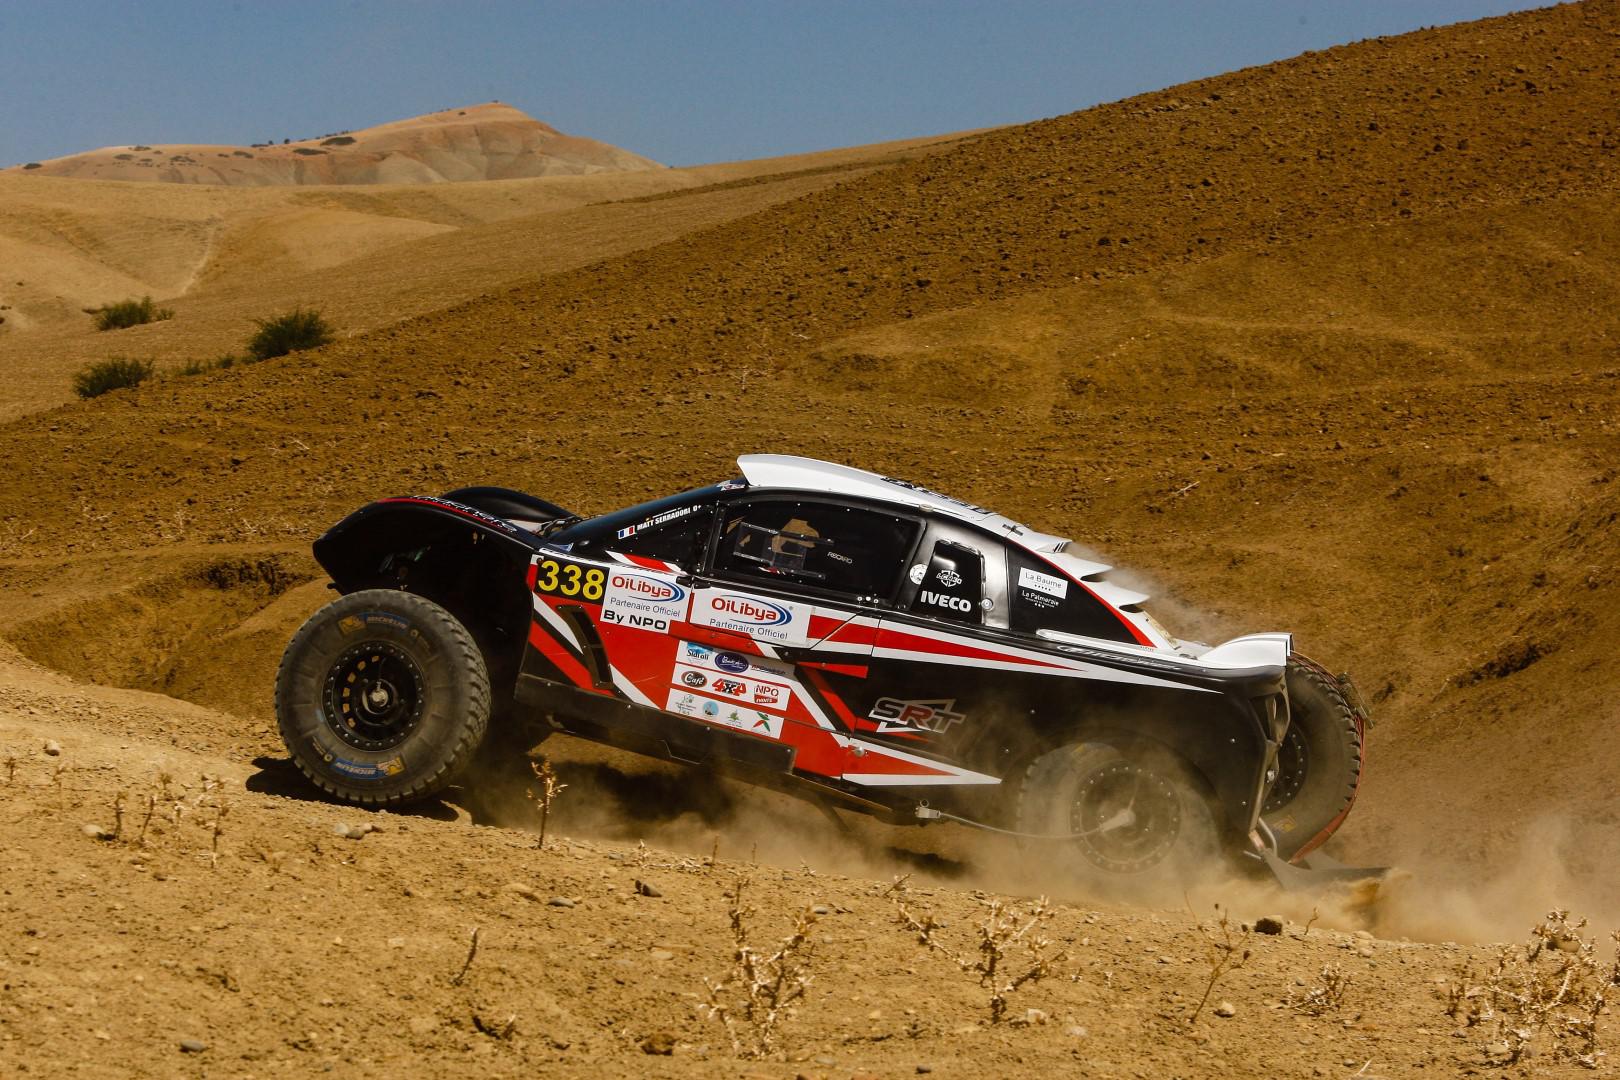 serradori-racing-team-rallye-oilibya-du-maroc-a-une-seconde-de-loeb-433-2.jpg